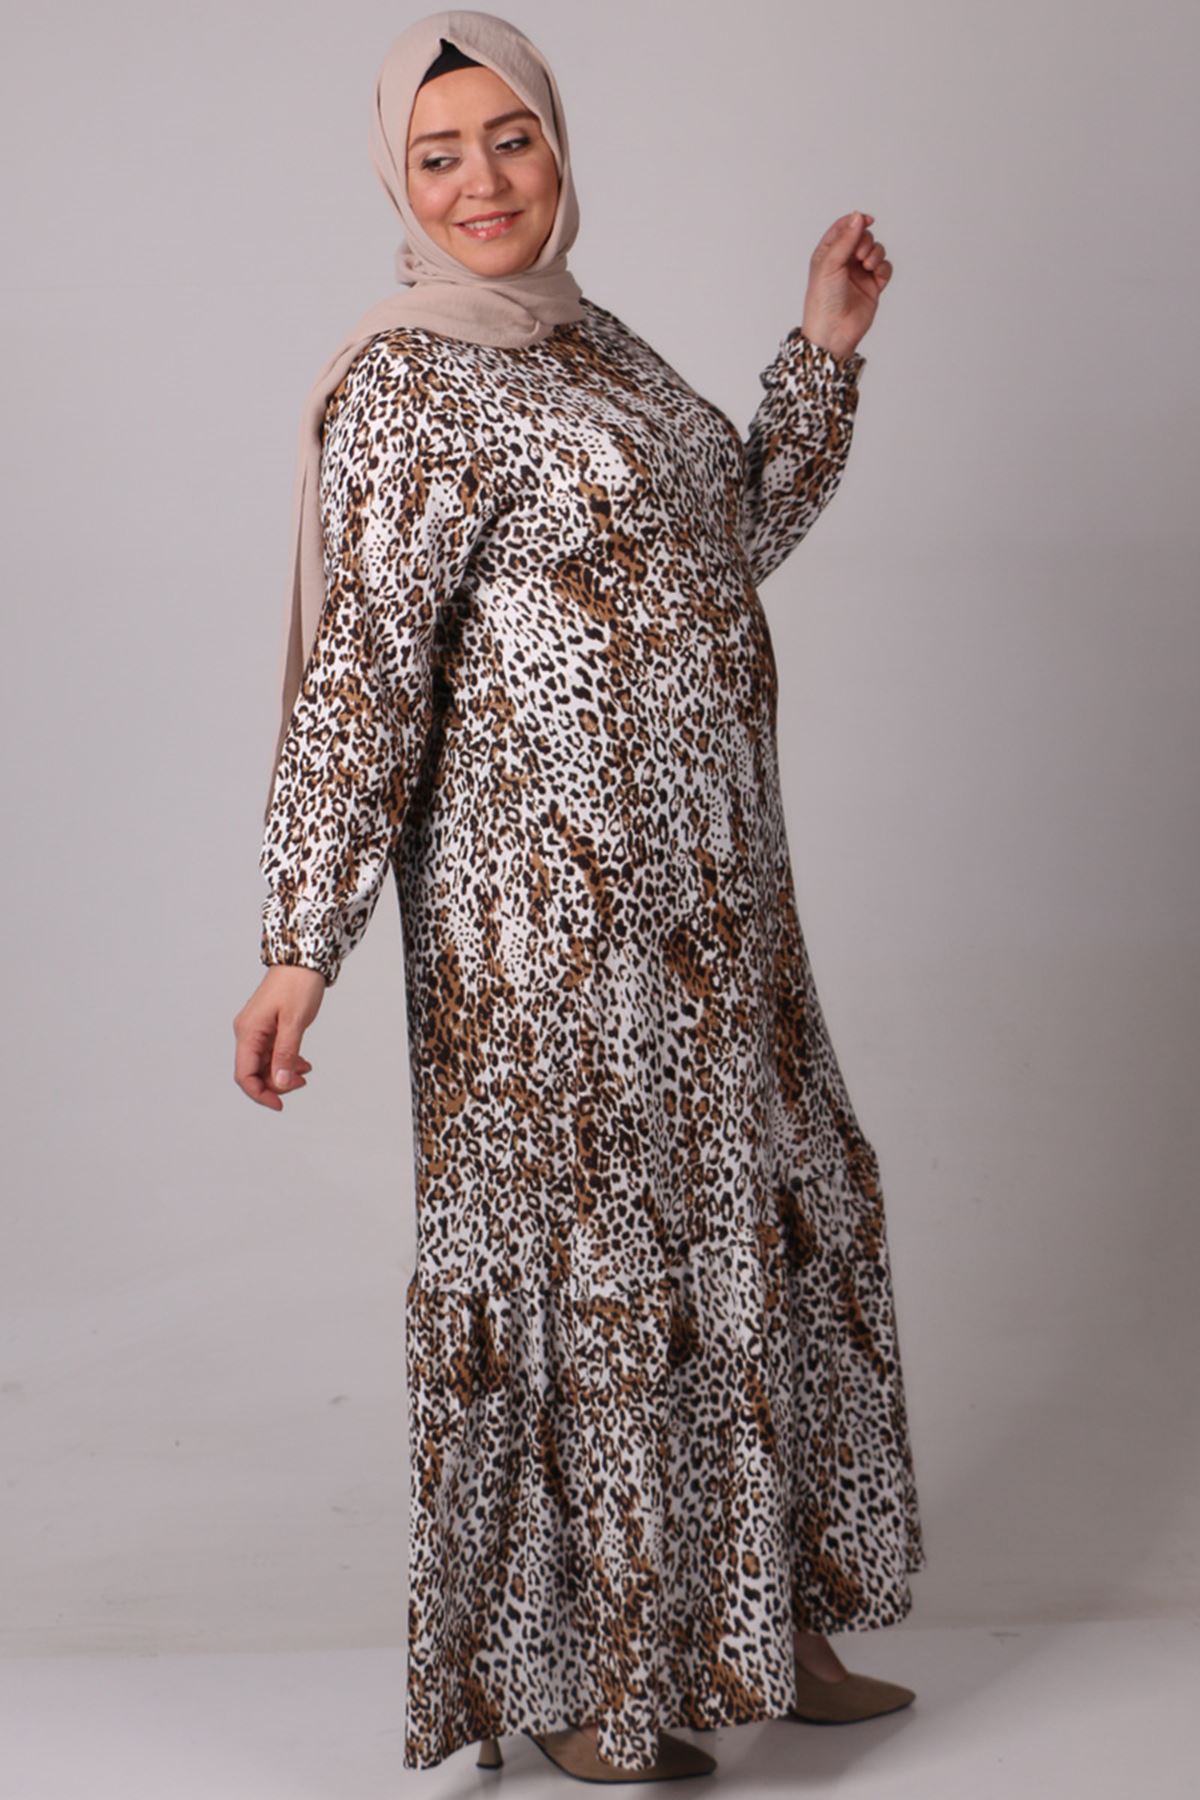 32024 Plus Size Skirt Frilly Crepe Dress -Leopard Patterned